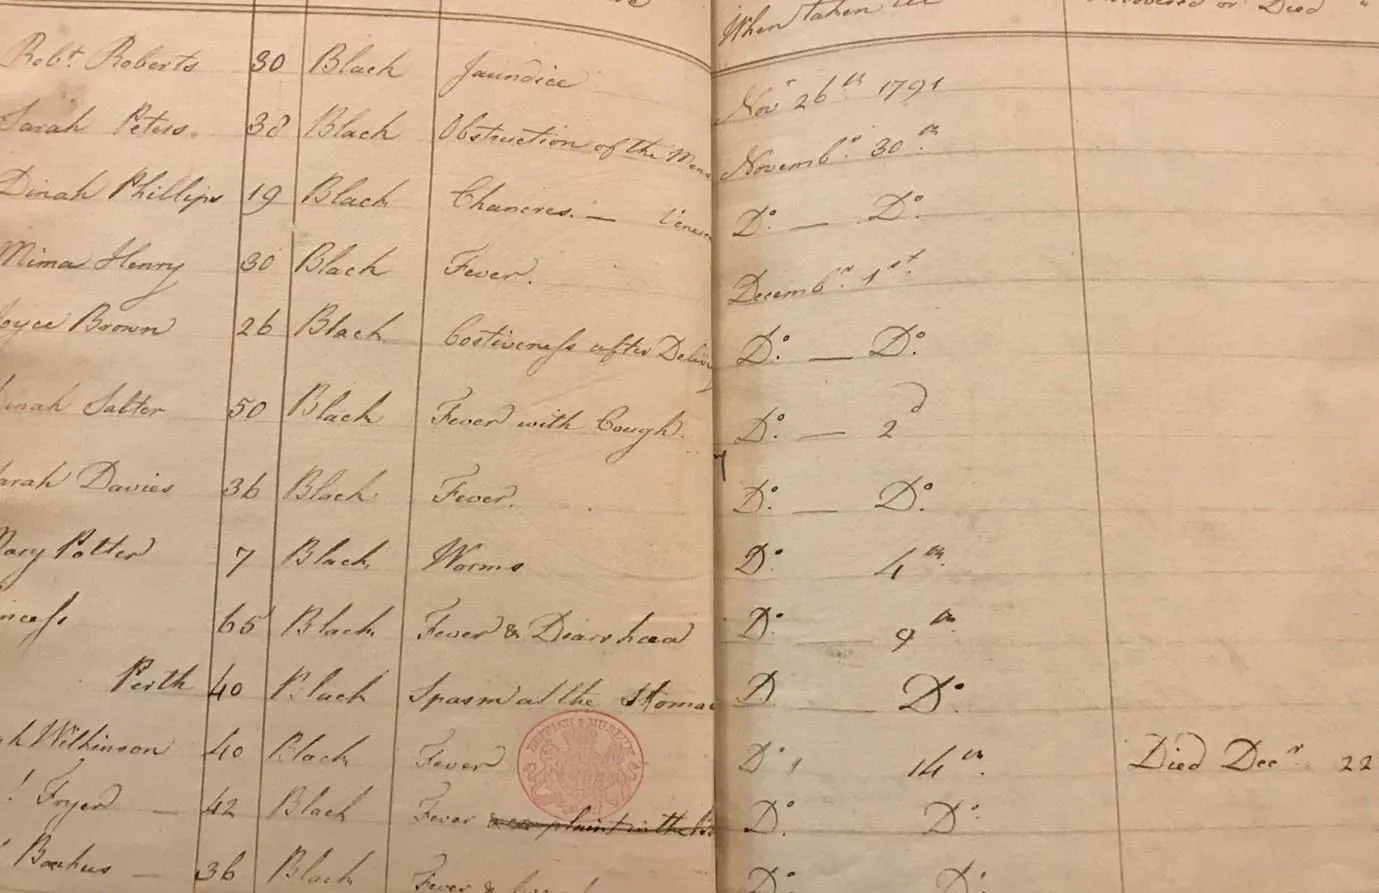 CEMS London Record of Slavery